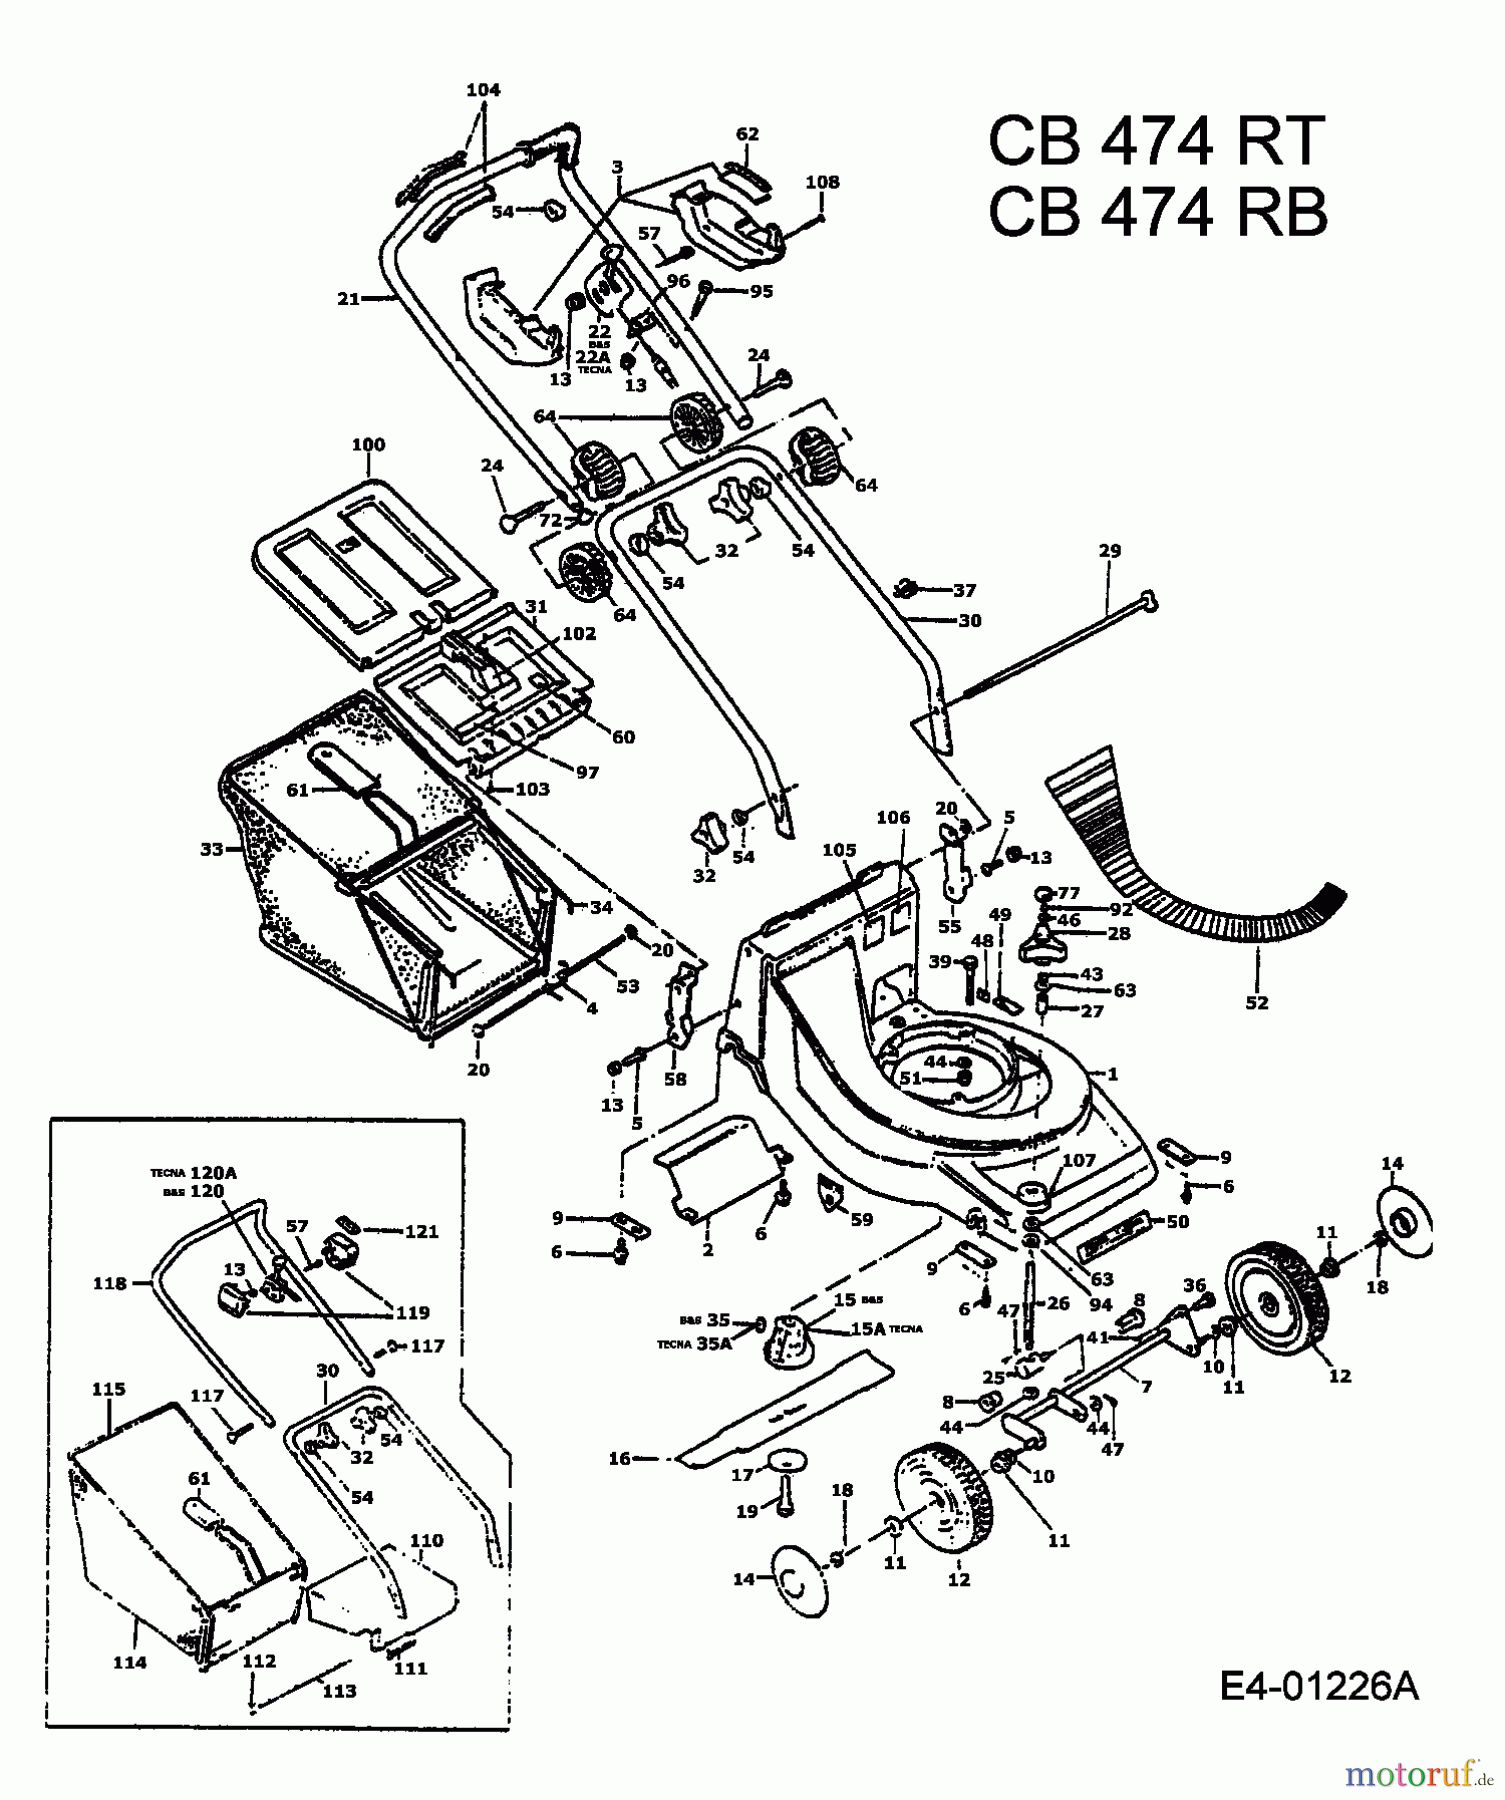  MTD Petrol mower self propelled CB 474 RB 901B467A004  (1994) Basic machine